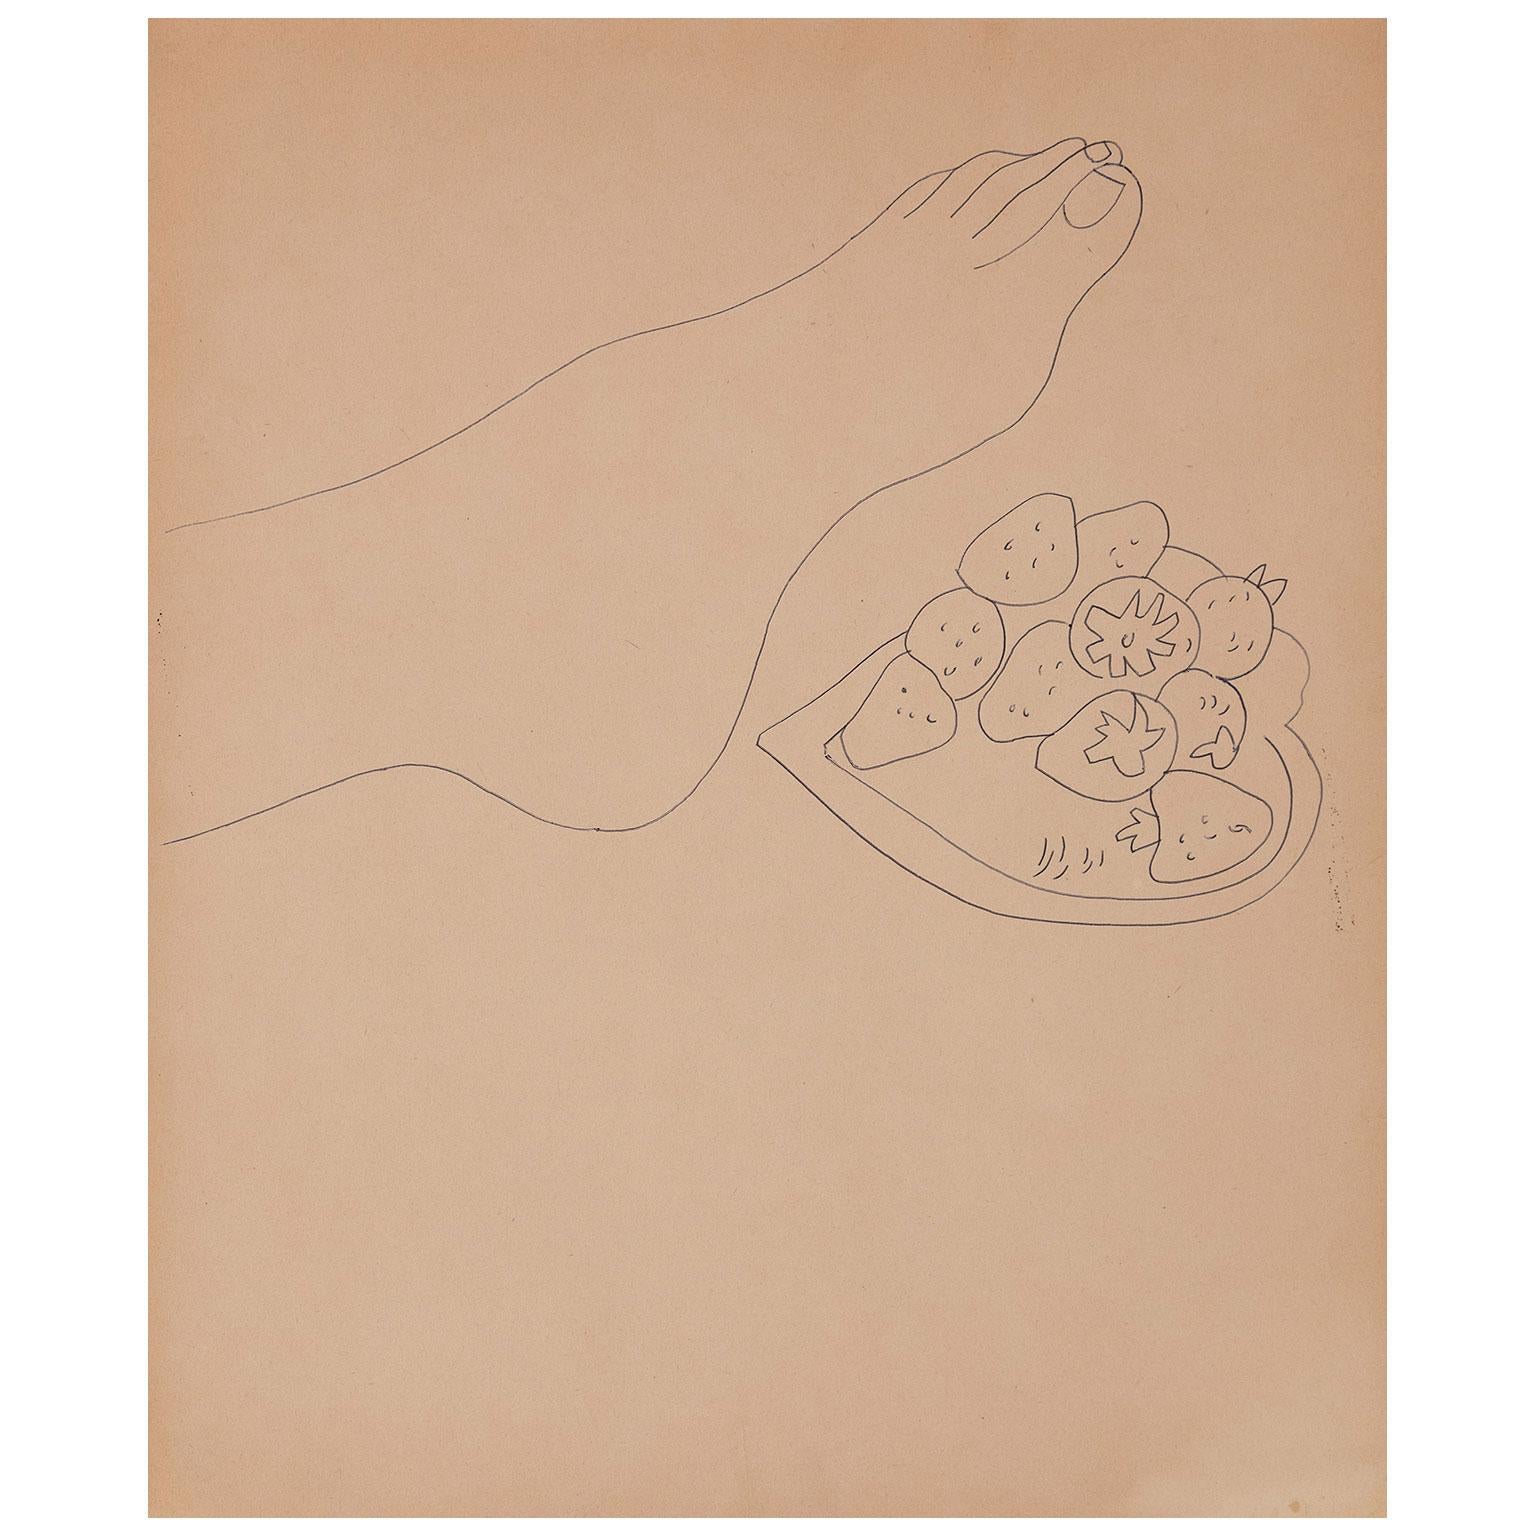 Recreation of an Andy Warhol sketch by cintart on DeviantArt